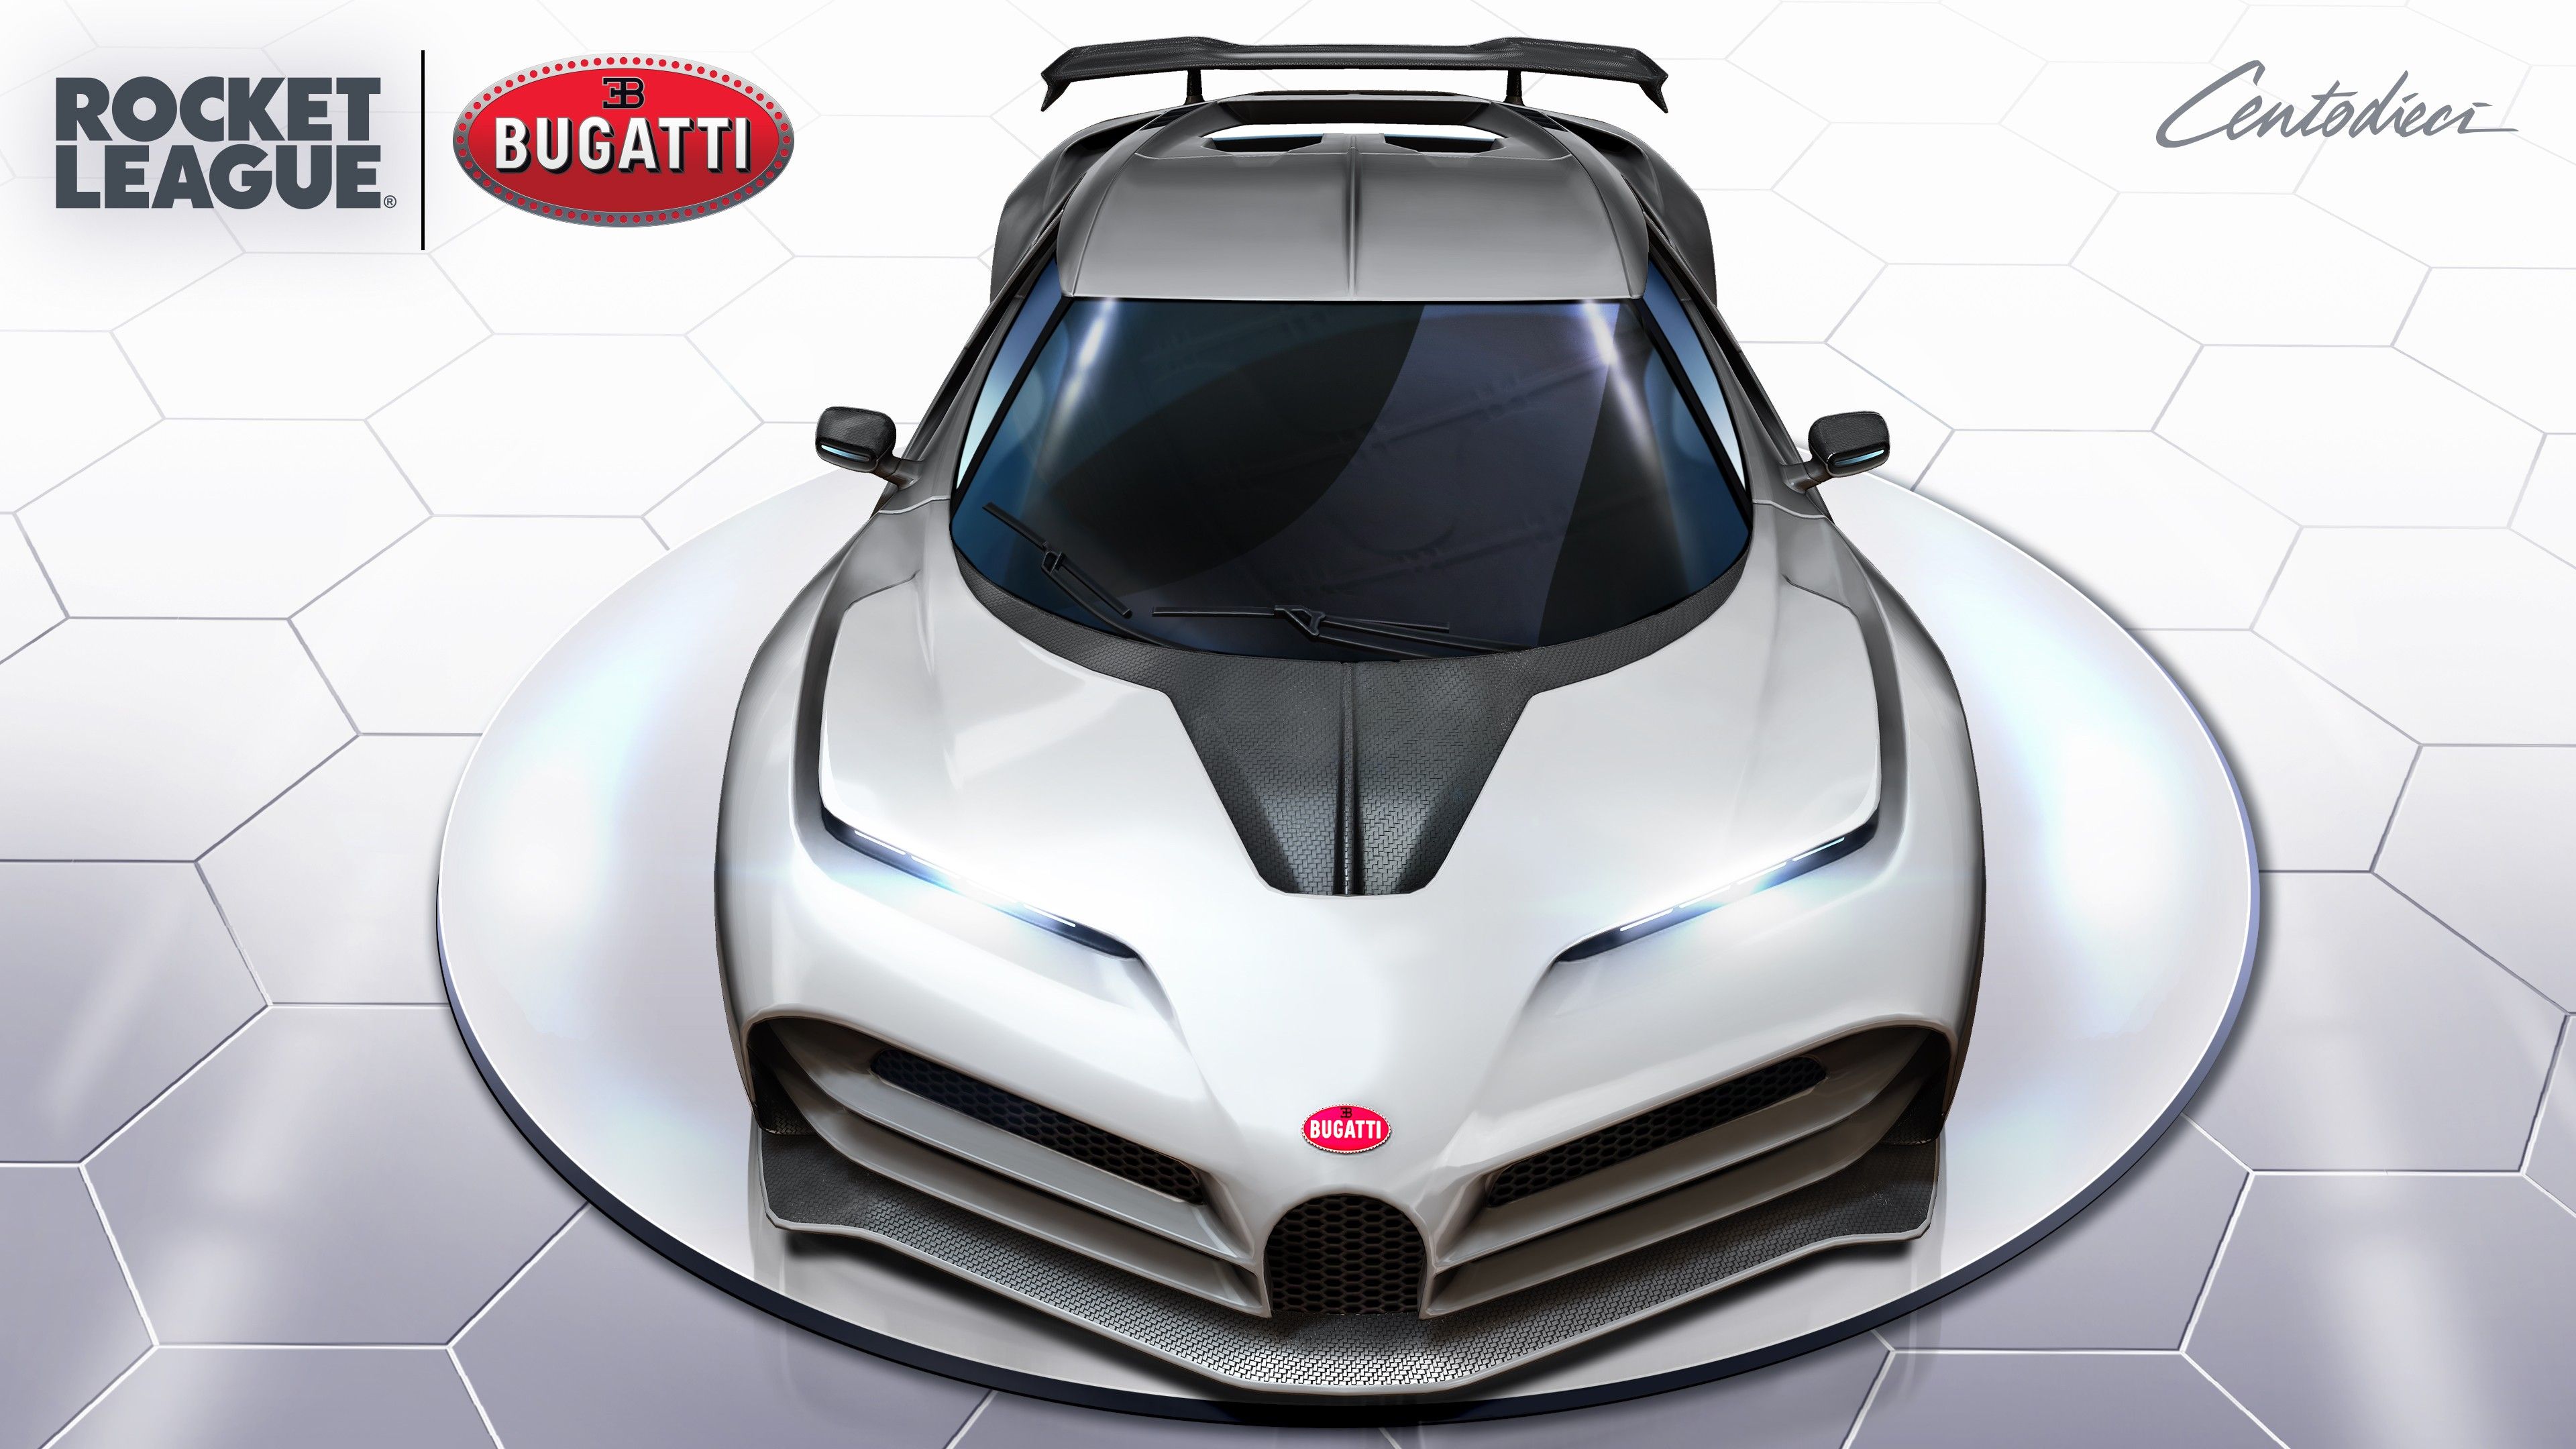 Bugatti Centodeci ridefinisce la potenza |  Rocket League®